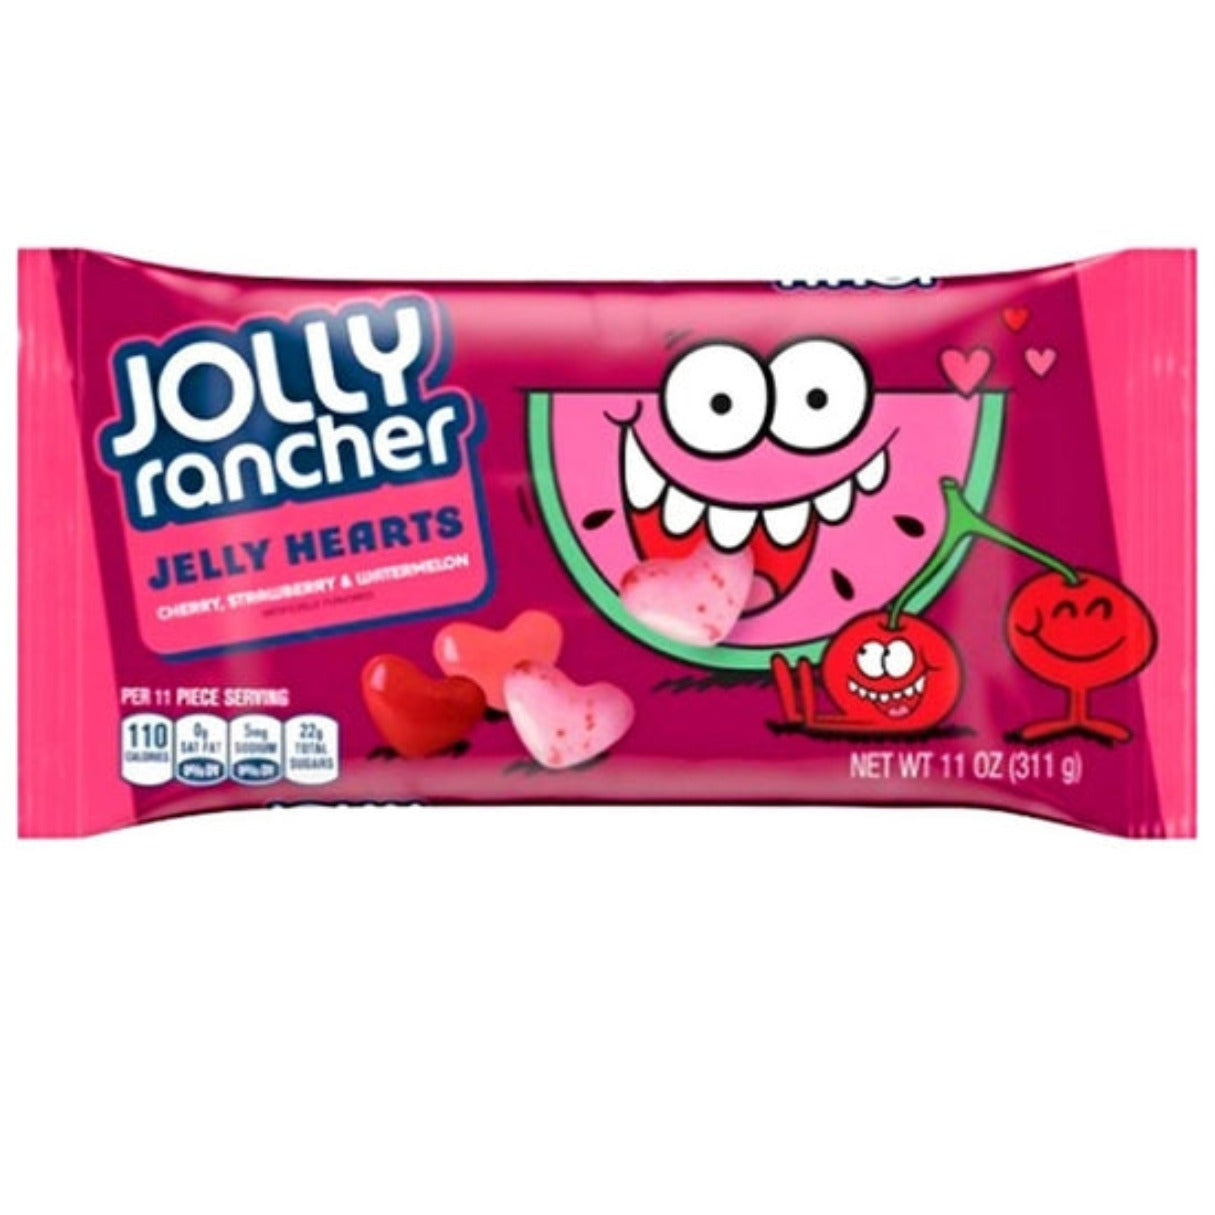 Jolly Rancher Jelly Hearts 11oz - 12ct